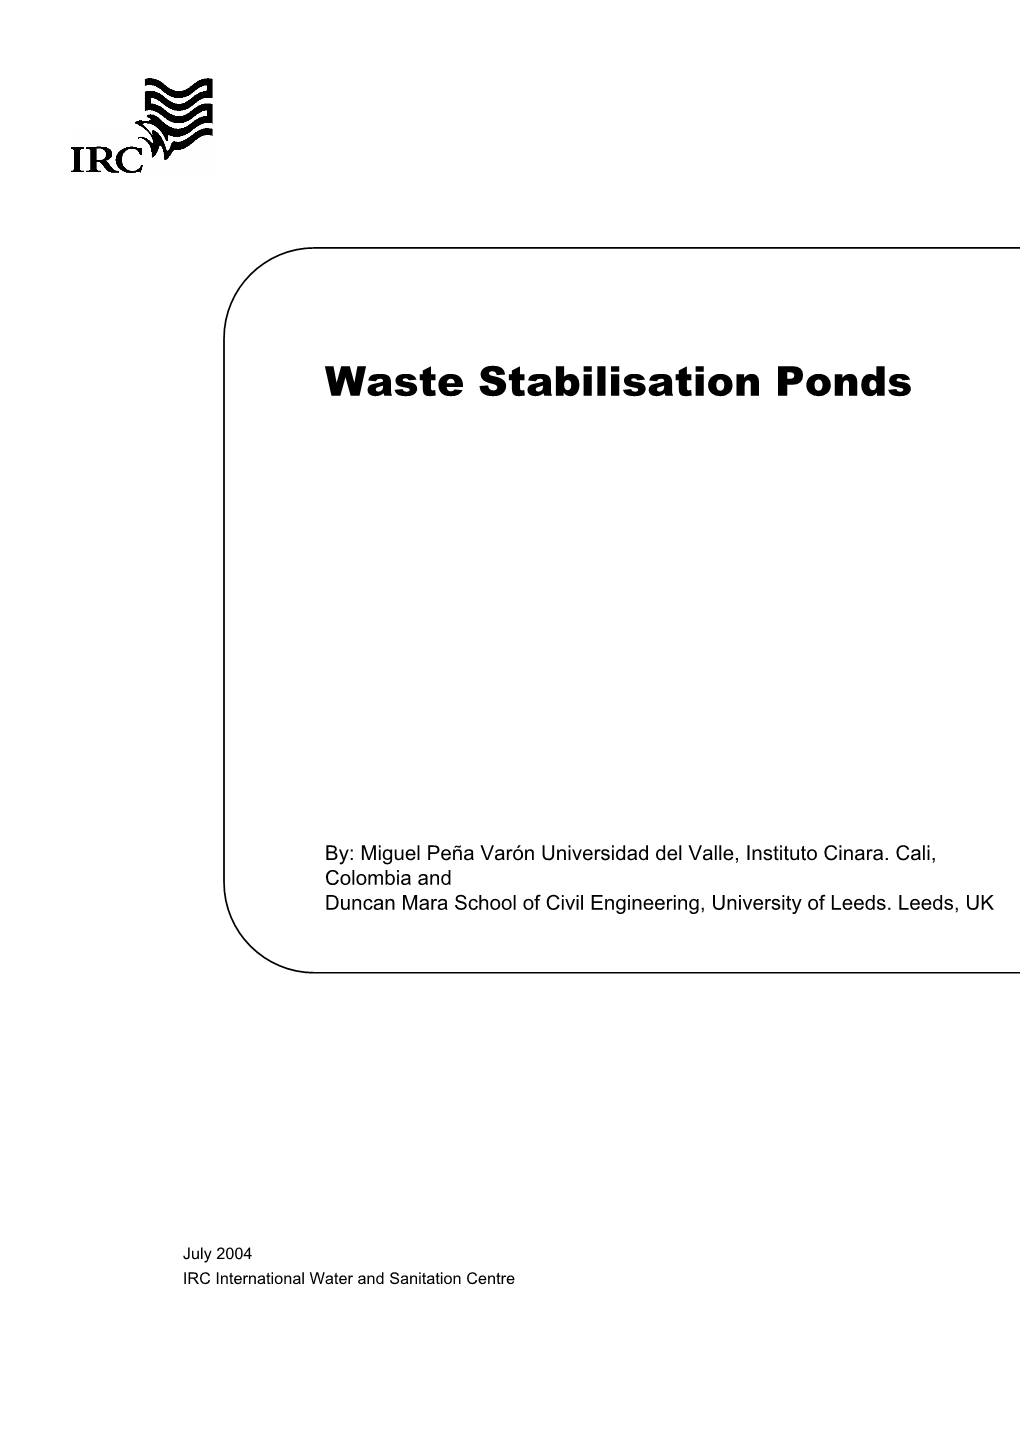 Wate Stabilization Ponds